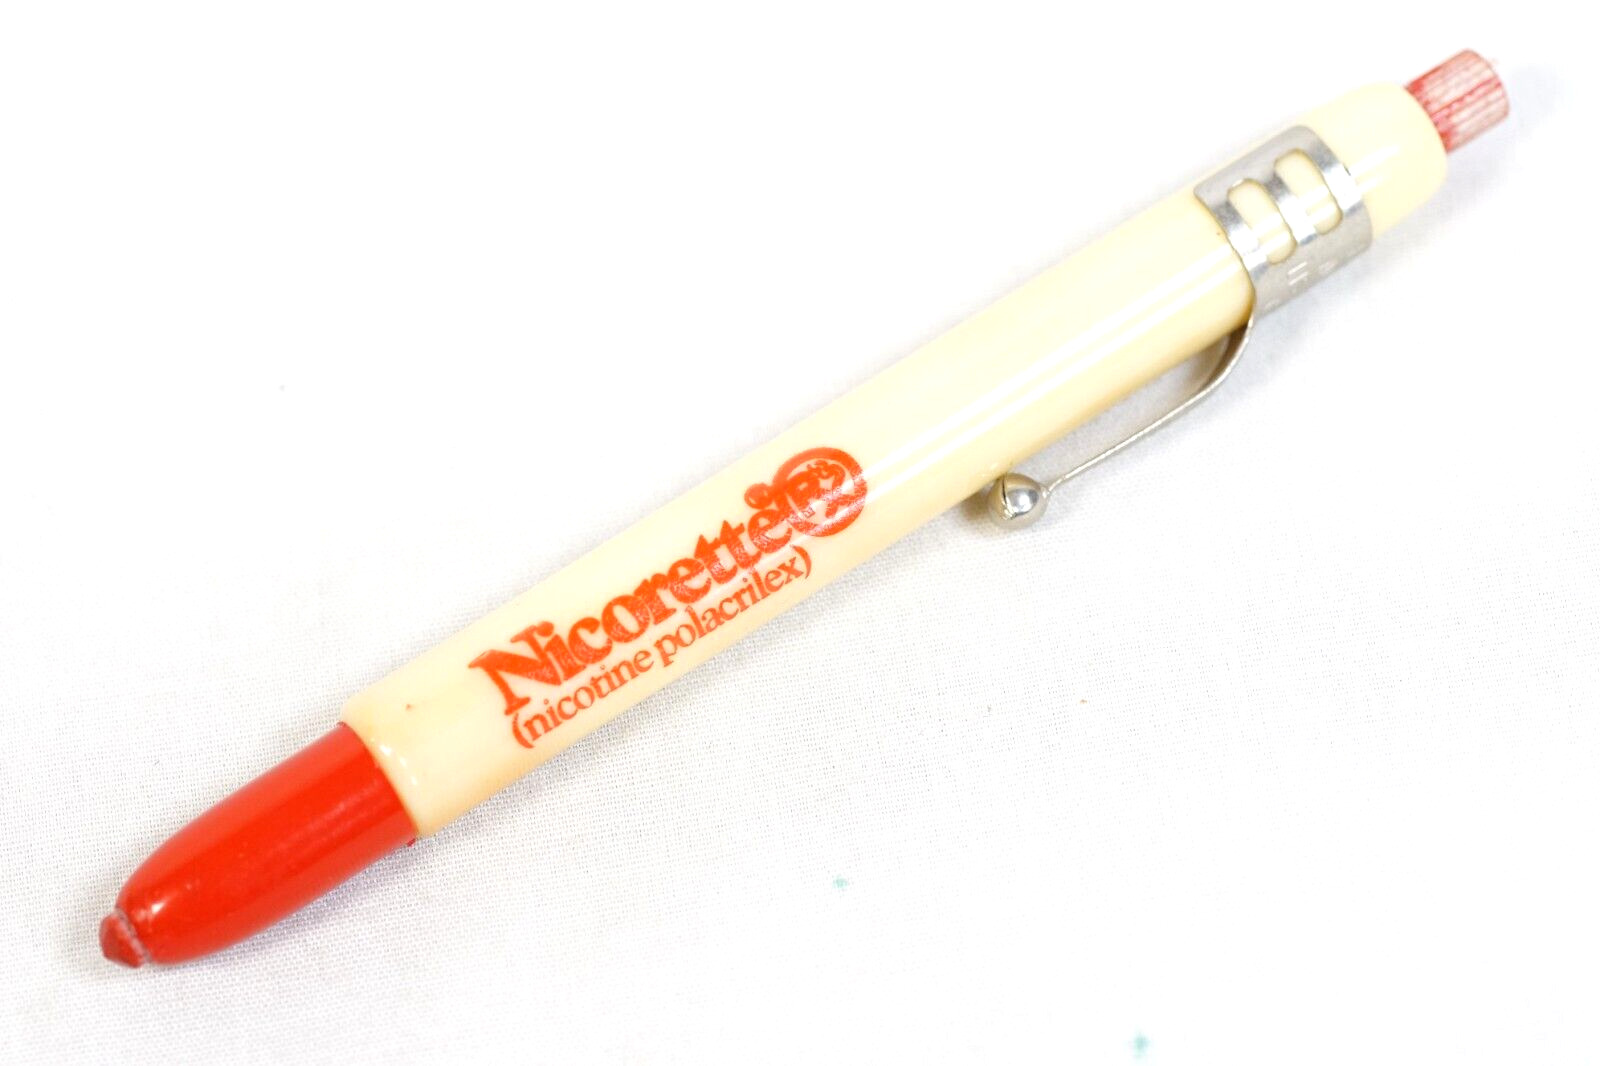 Nicorette Nicotine Polacrilex Pharmaceutical Advertising Red Listo Mark  Pencil